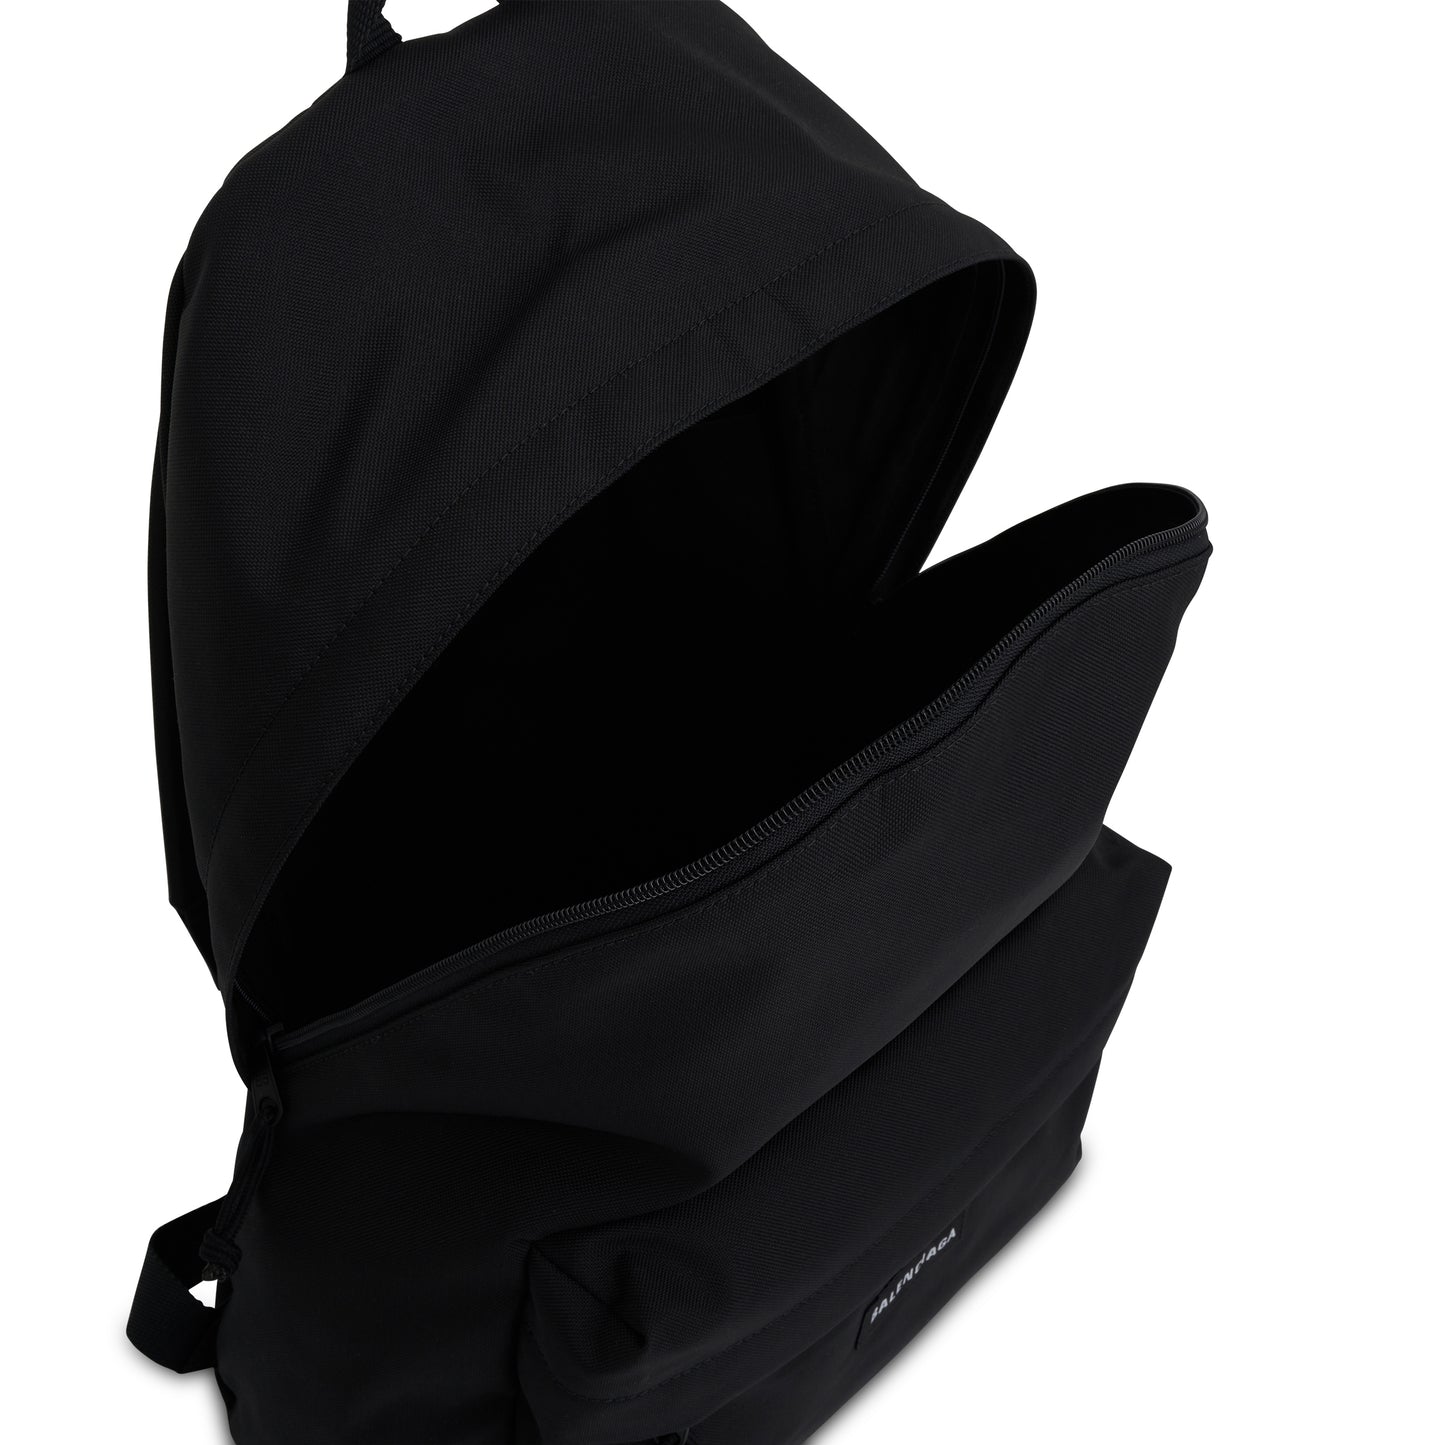 Explorer Backpack in Black